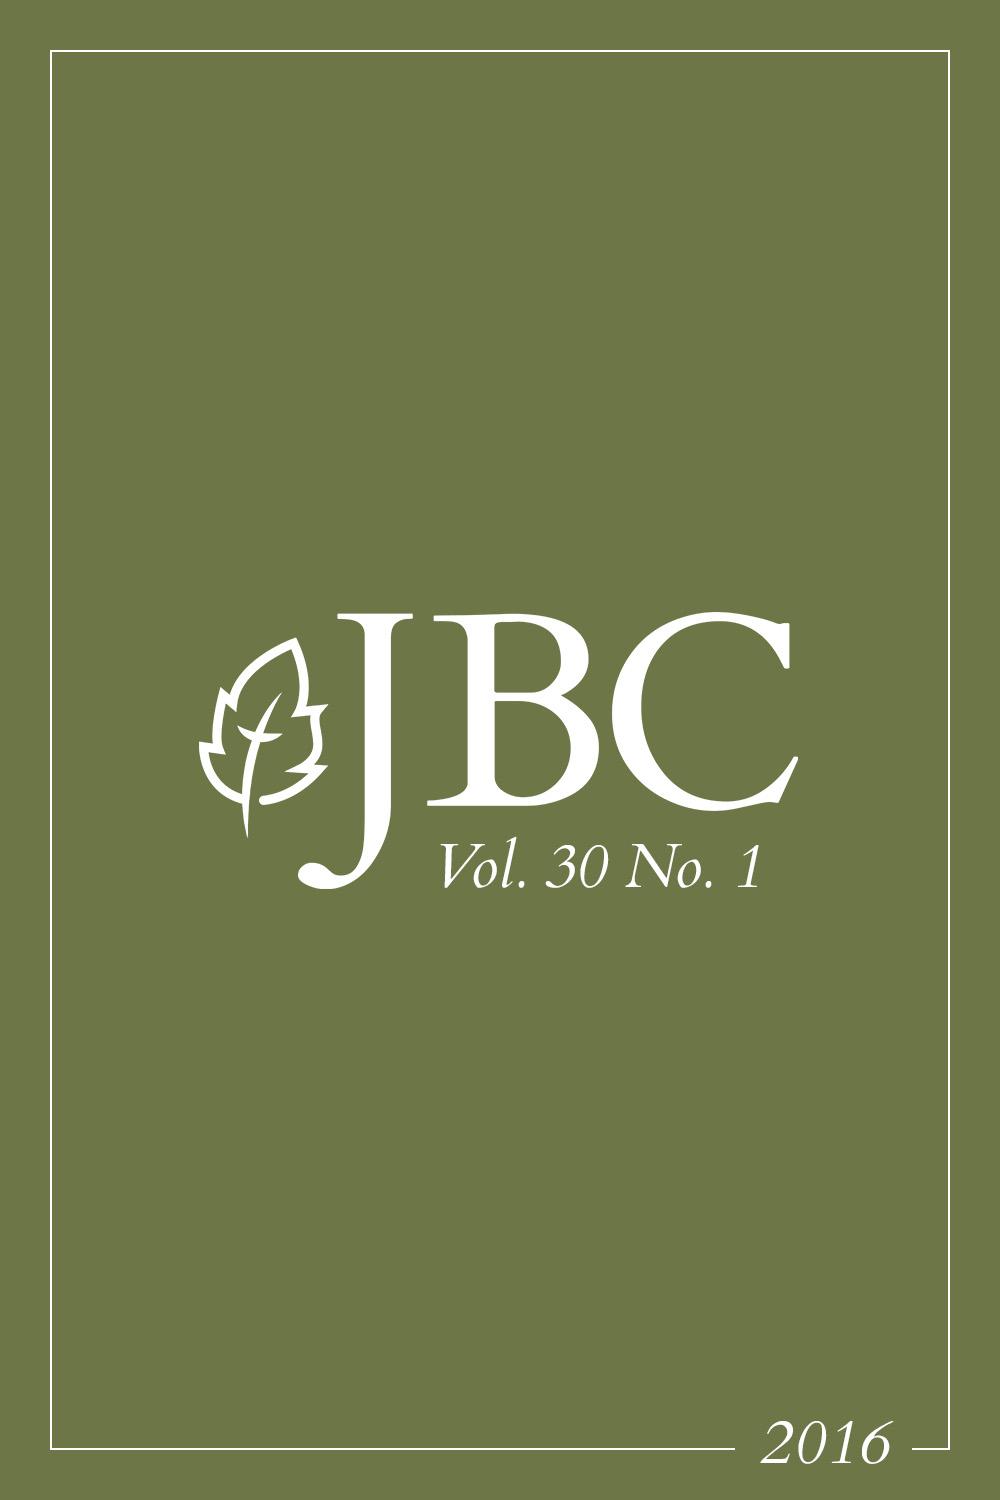 JBC Volume 30:1 (2016) PDF Featured Image